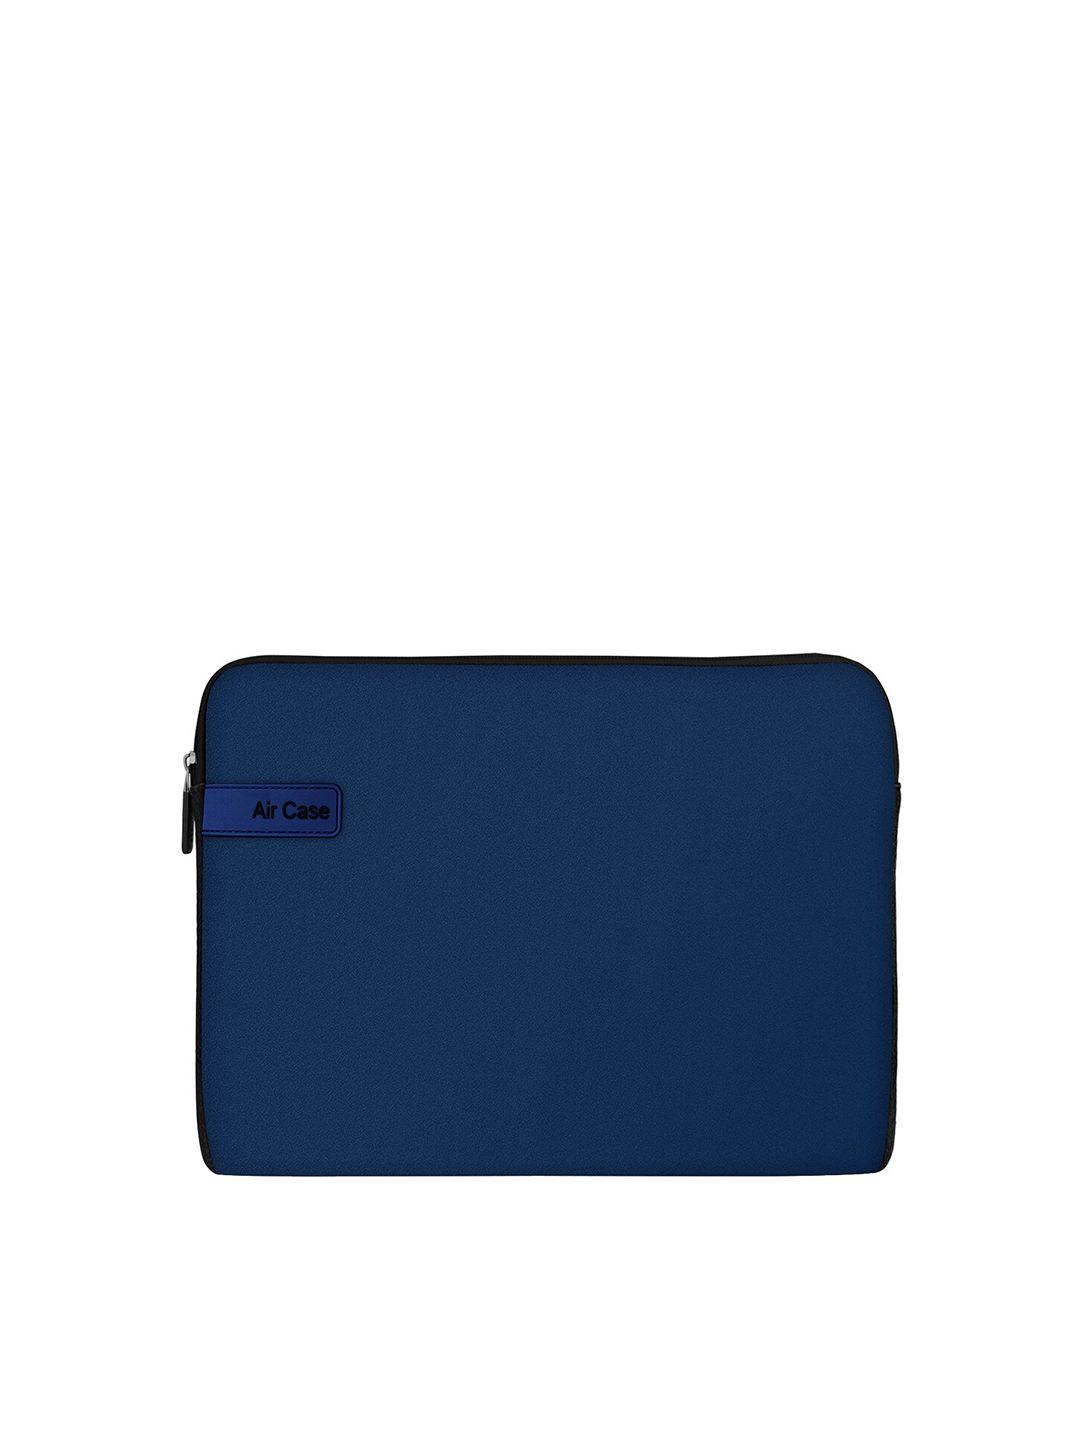 aircase unisex dark blue solid 14.1 inch laptop sleeve